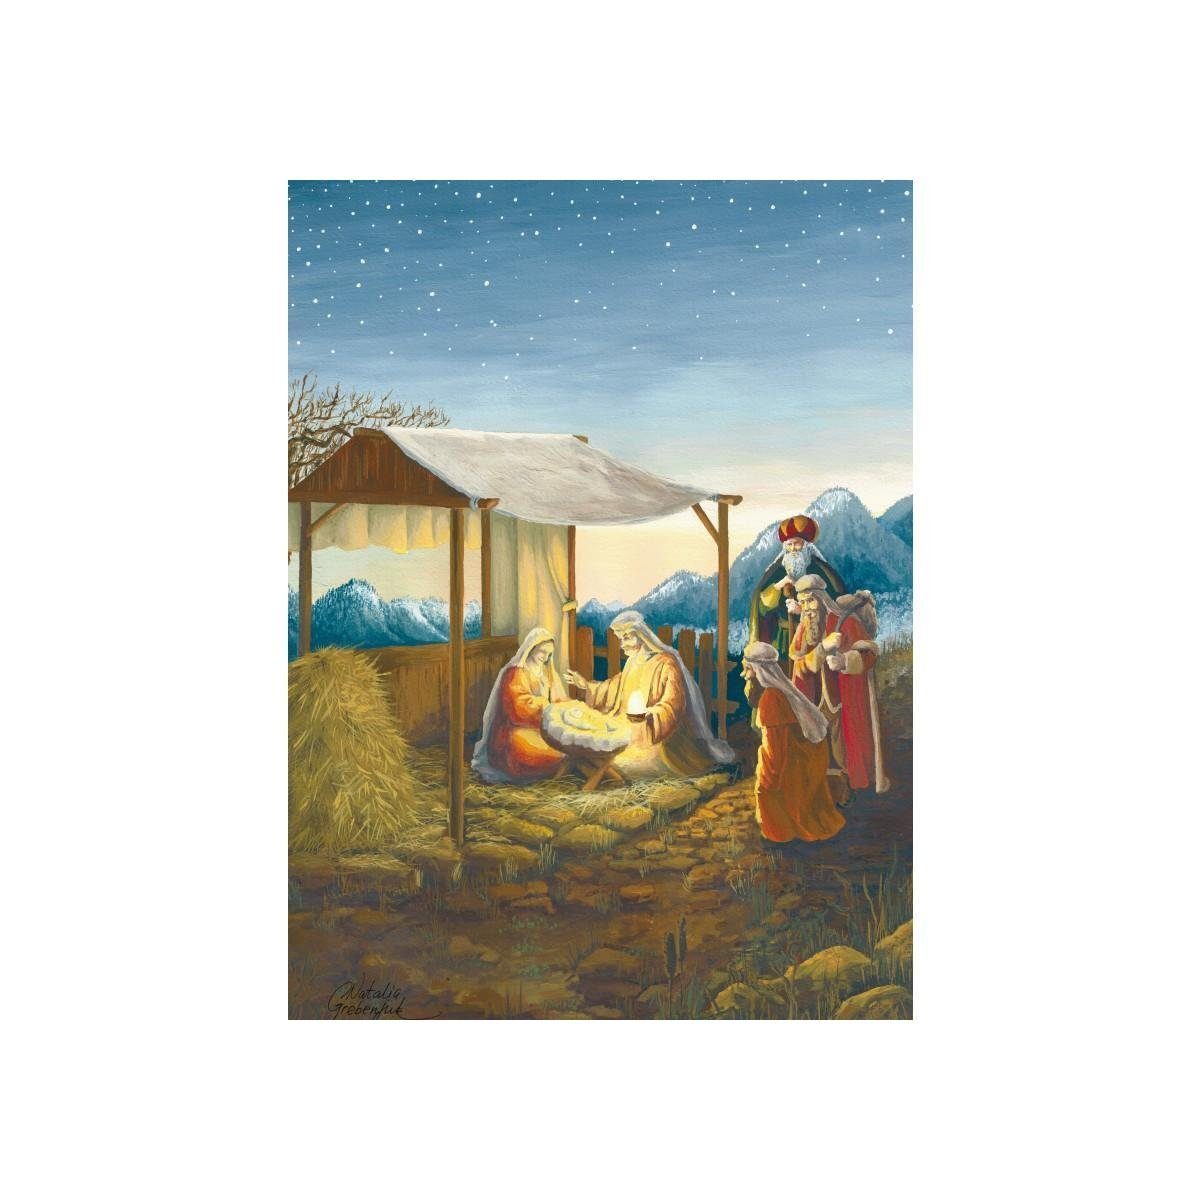 (Adventskalender) 1065 pappnoptikum Nacht - Adventskalender Heilige